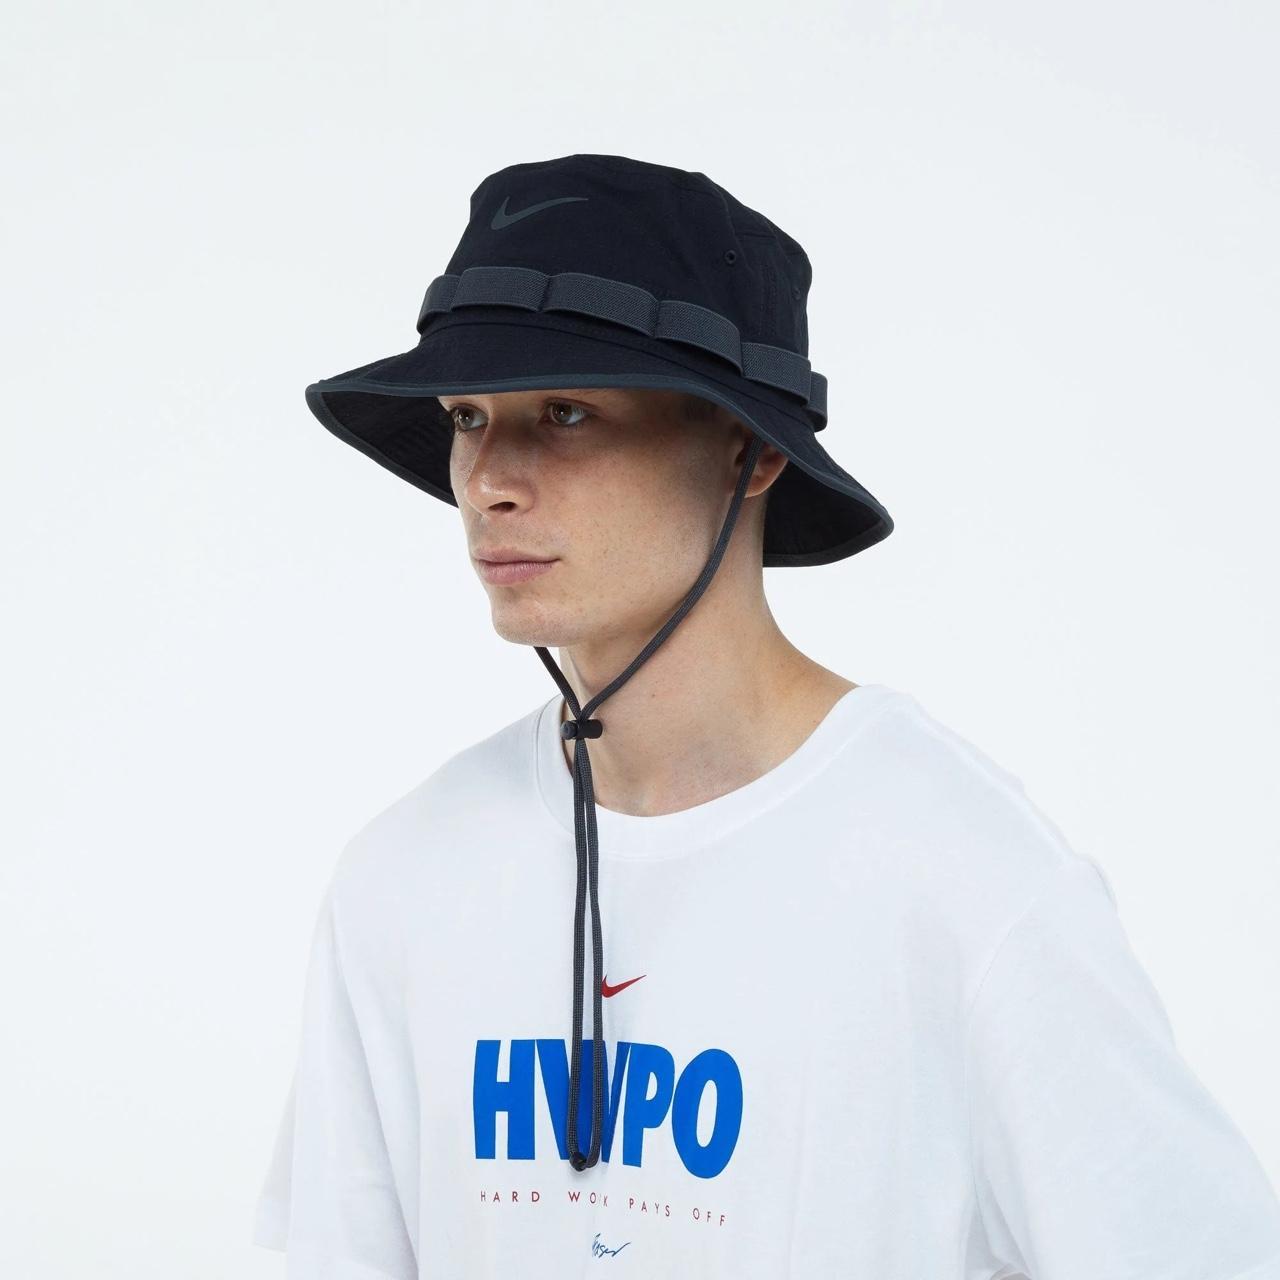 Nike Men's Black Hat | Depop